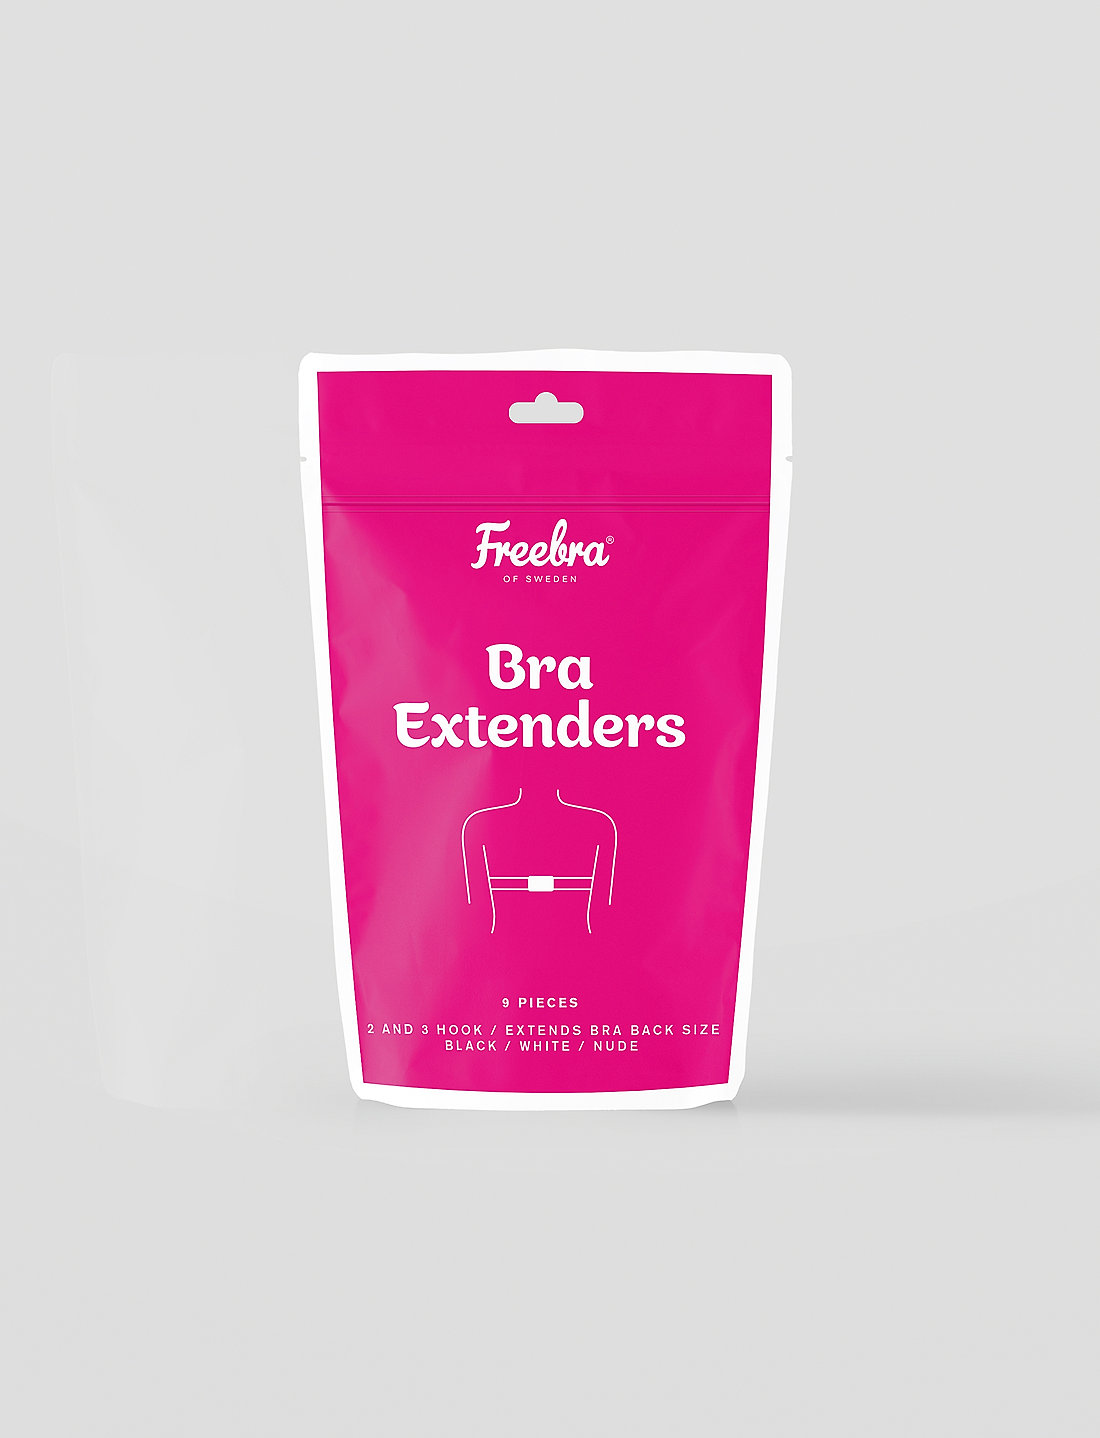 Freebra Bra Extenders - Bras 